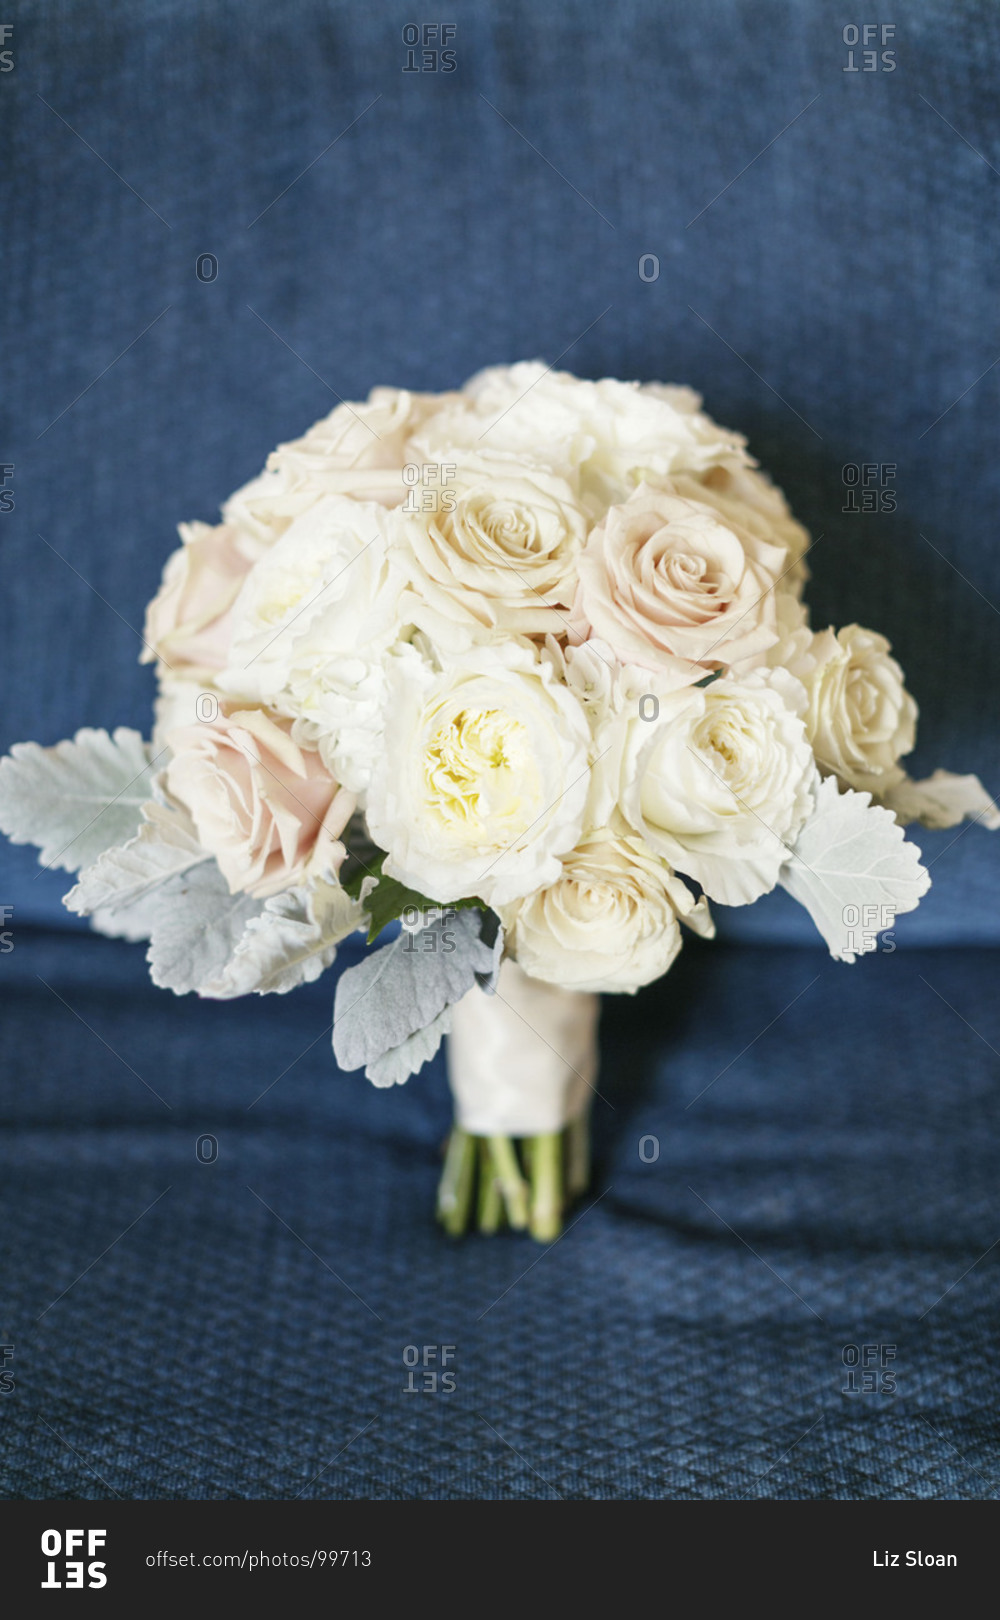 Bridal bouquet prepared for wedding ceremony